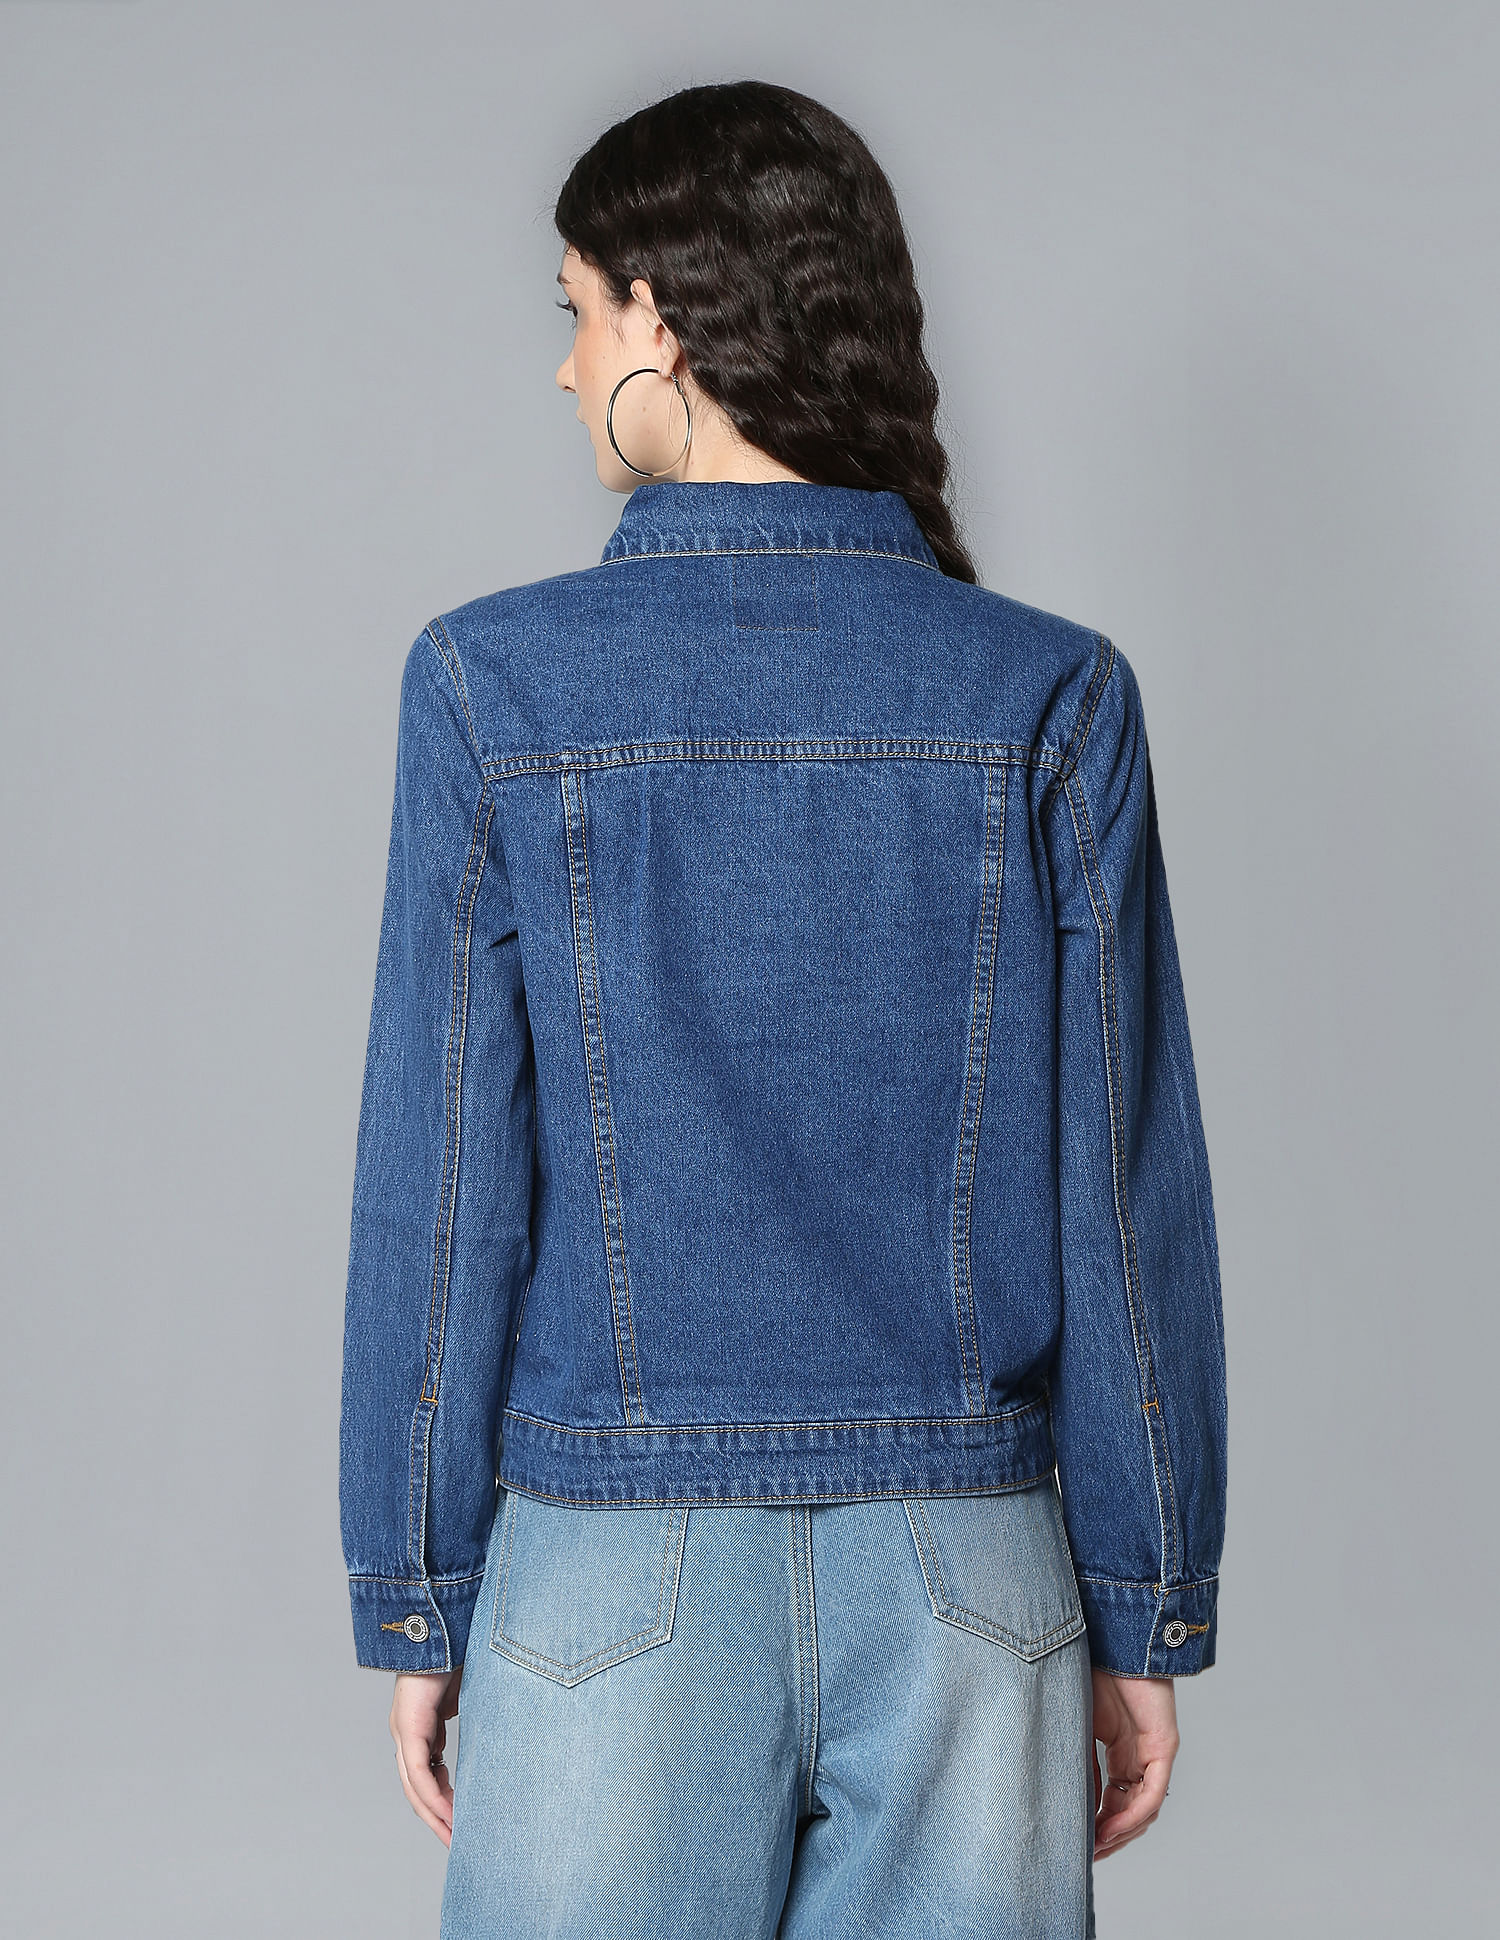 SCOFEEL Cropped Jean Jacket for Women Regular Fit Embellished Stars Denim  Jacket Coat Light Blue, XX-Large at Amazon Women's Coats Shop